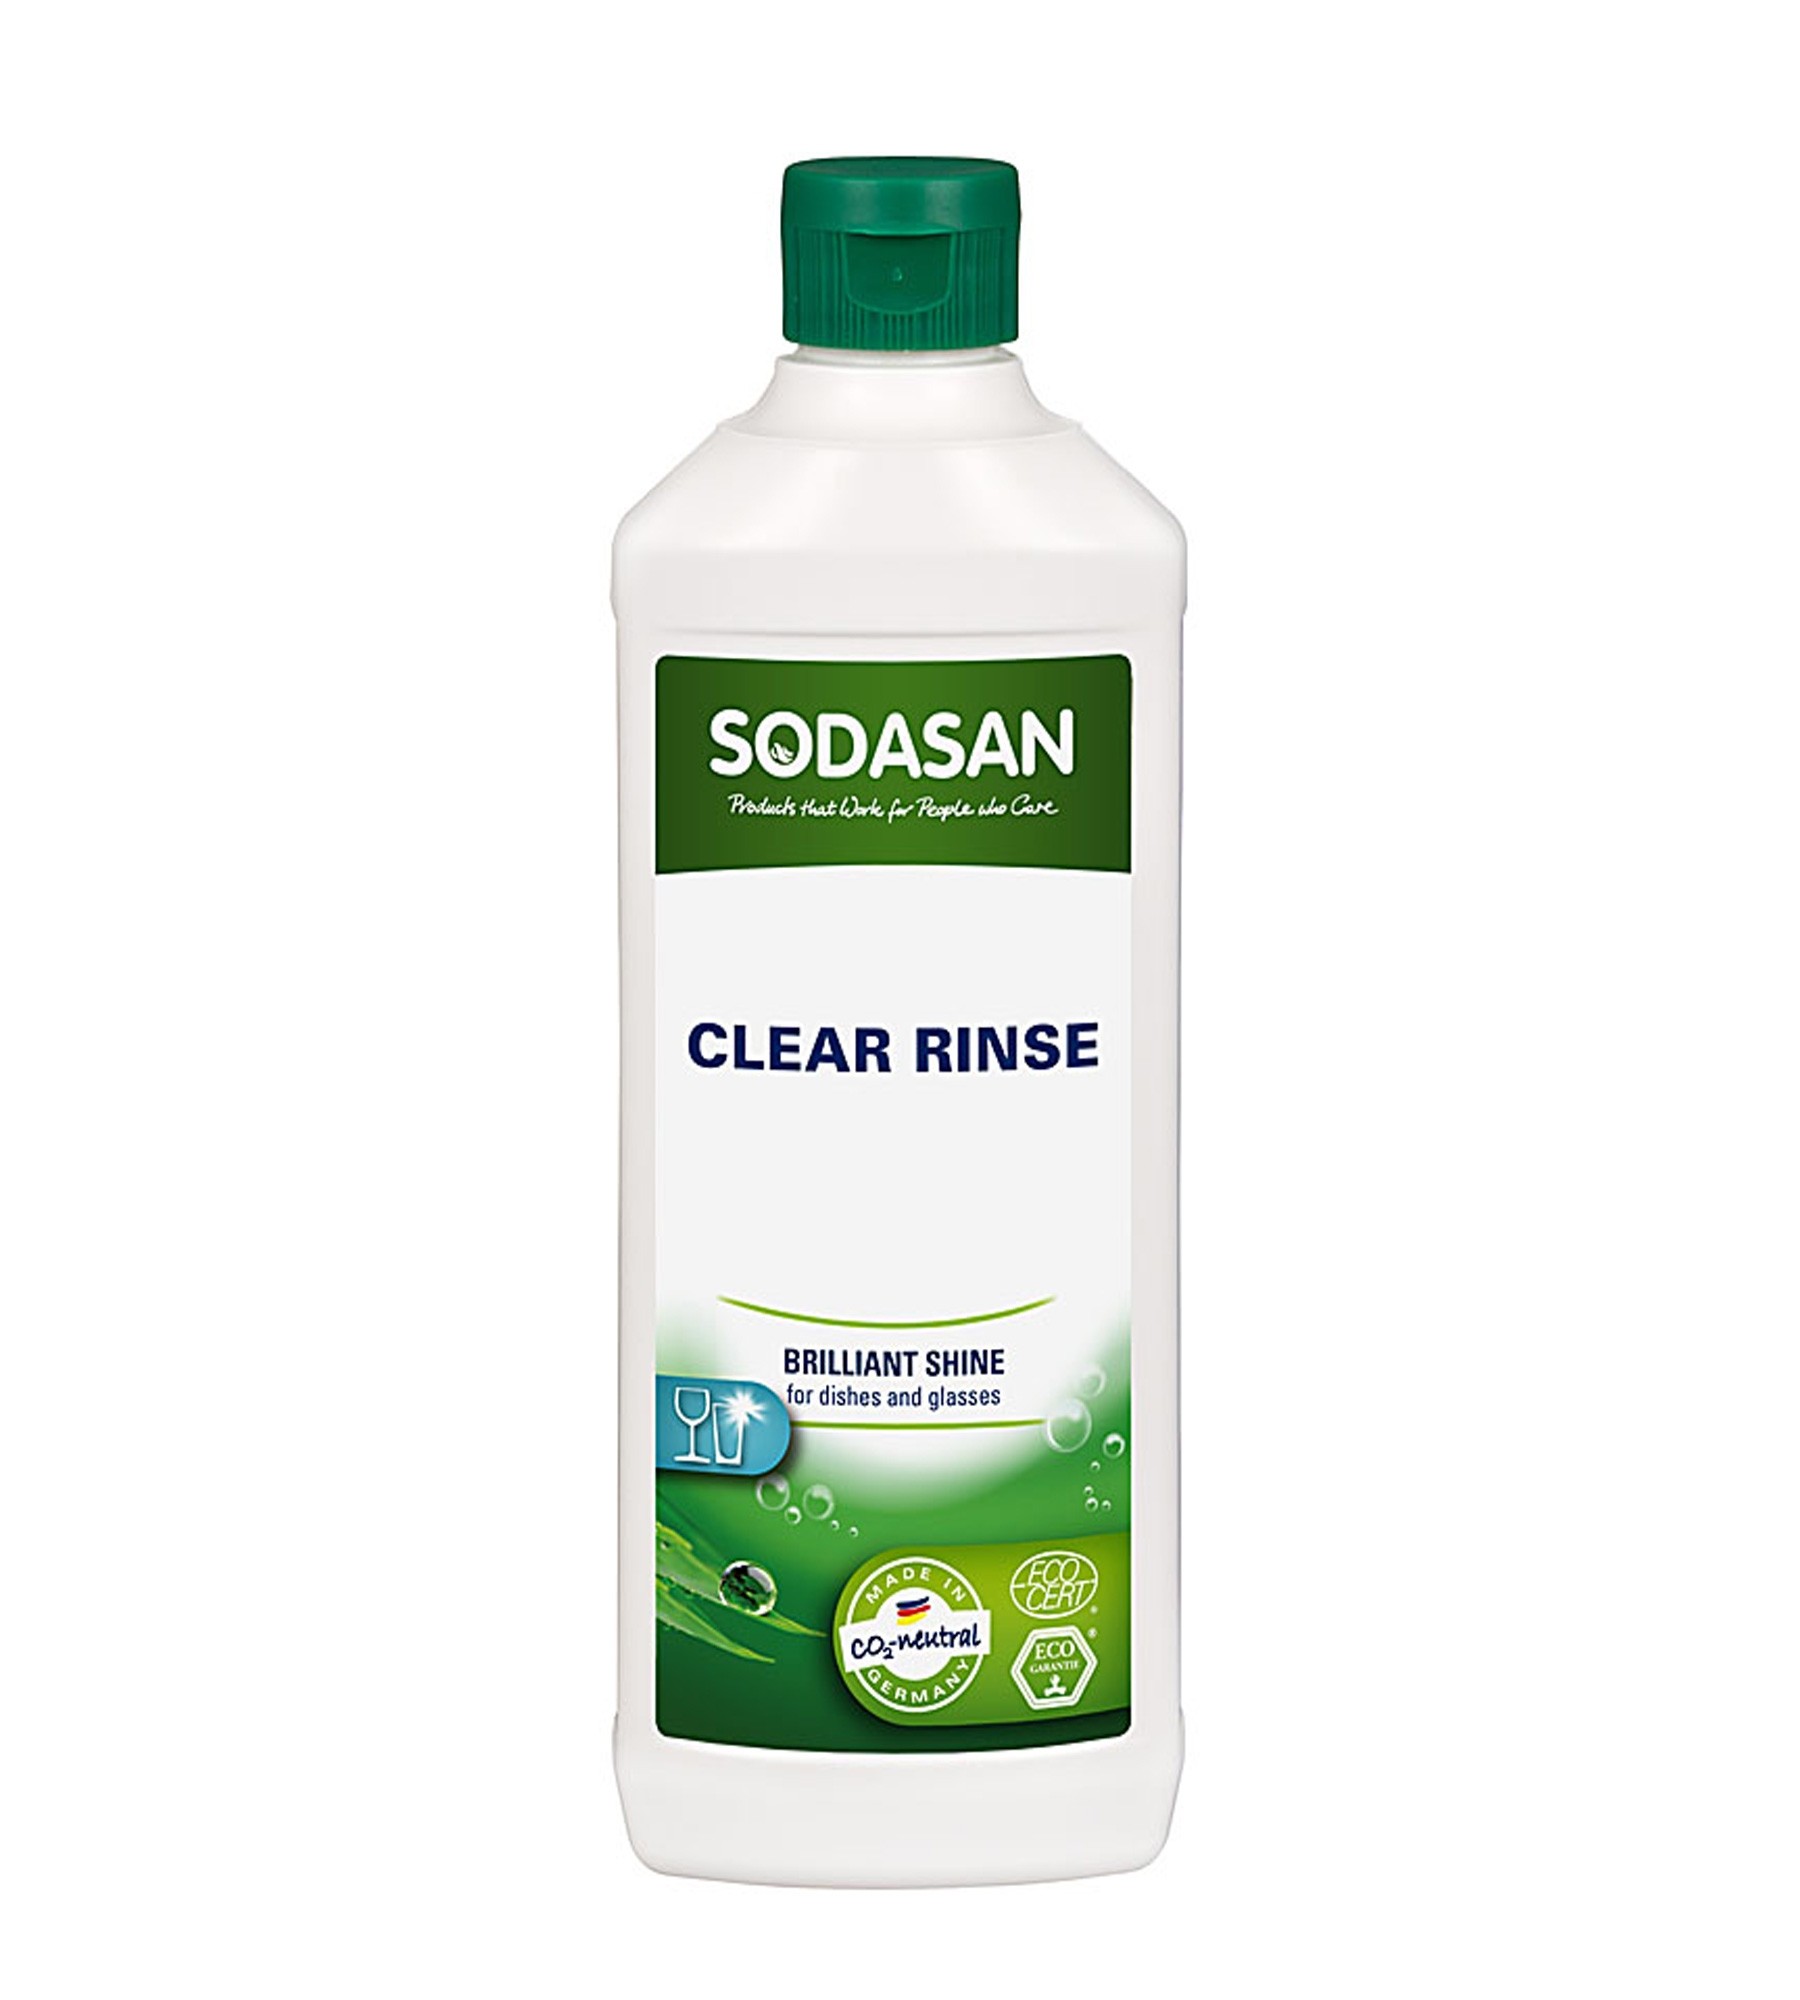 Sodasan Clear Rinse